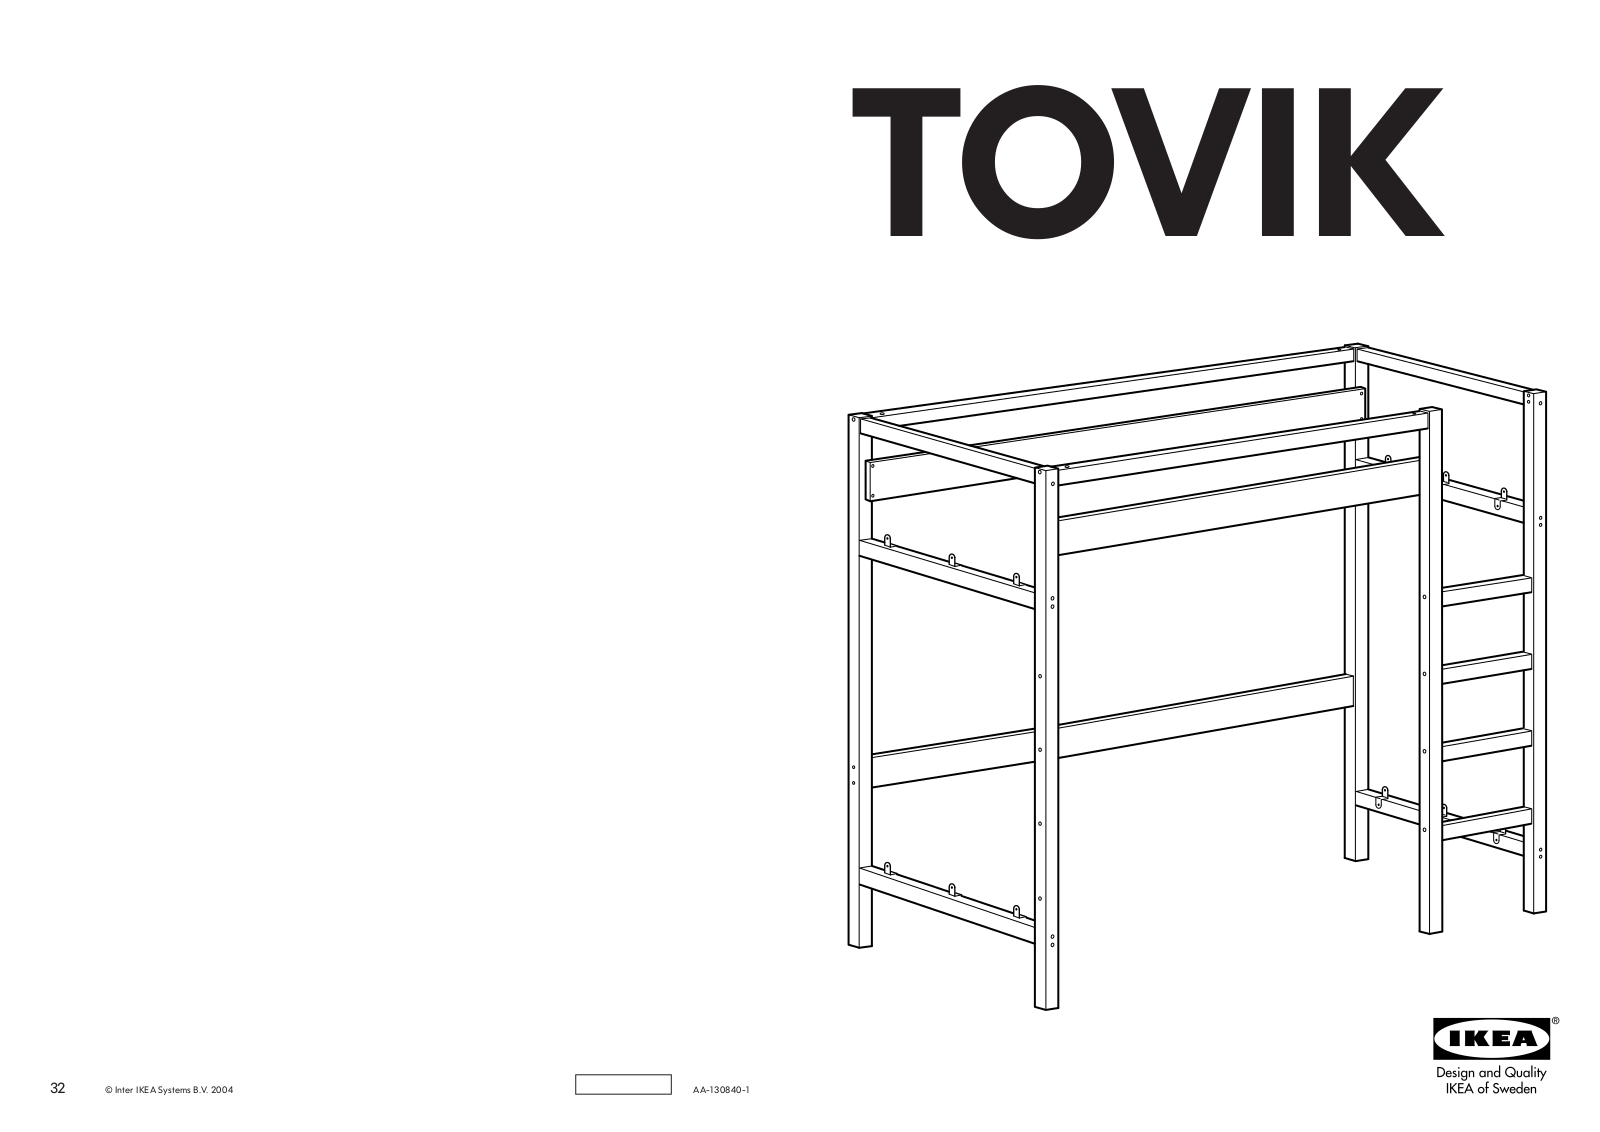 IKEA TOVIK LOFT BUNK BED FRAME Assembly Instruction